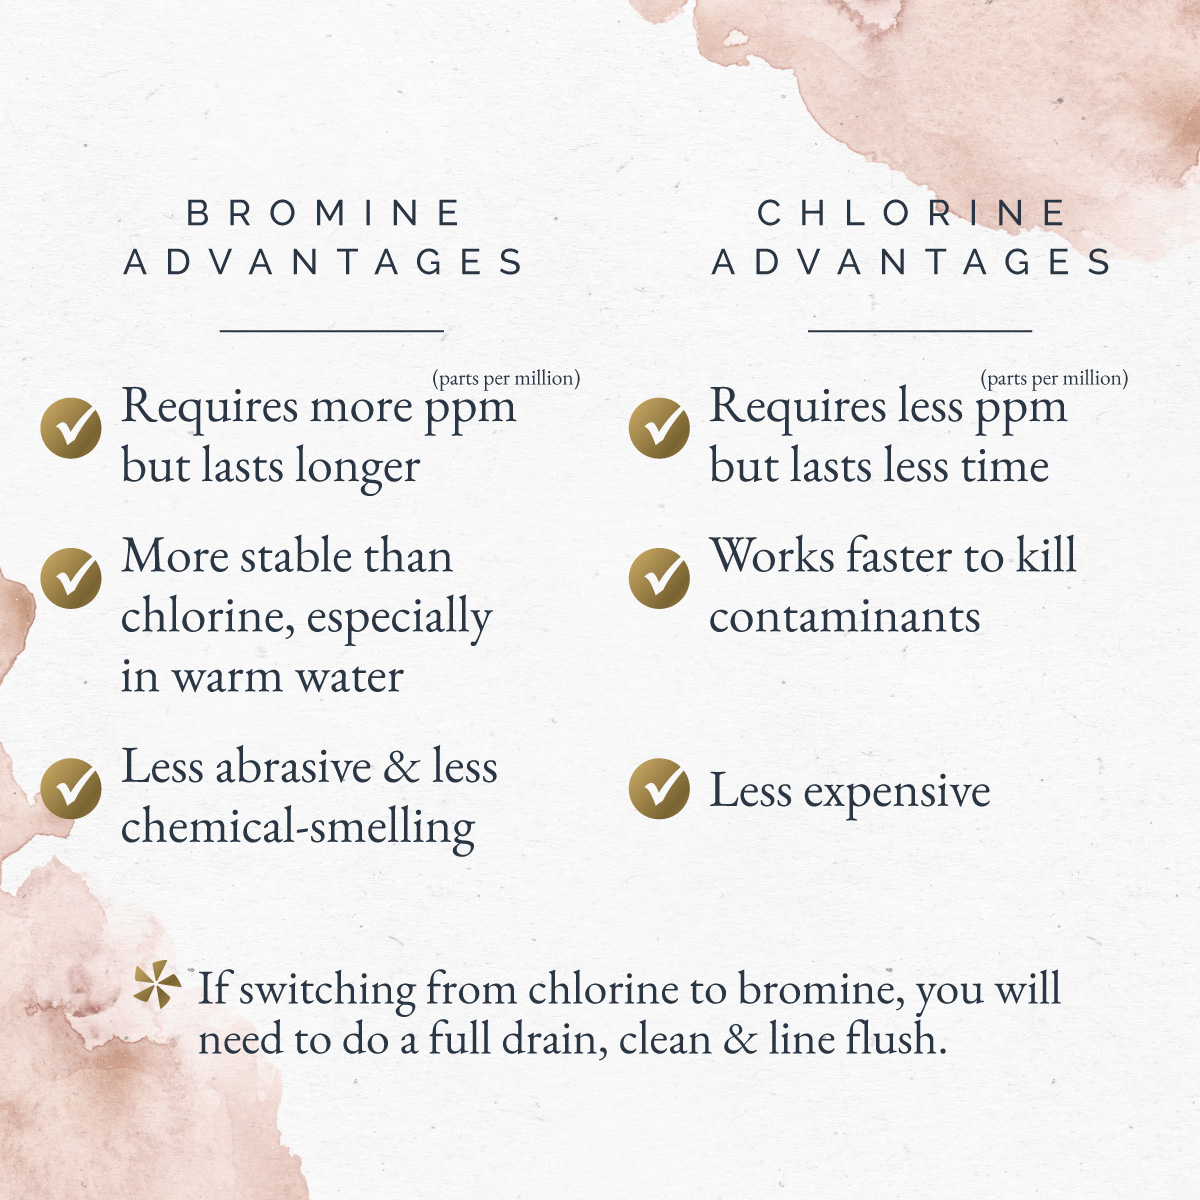 Bromine and Chlorine advantage chart